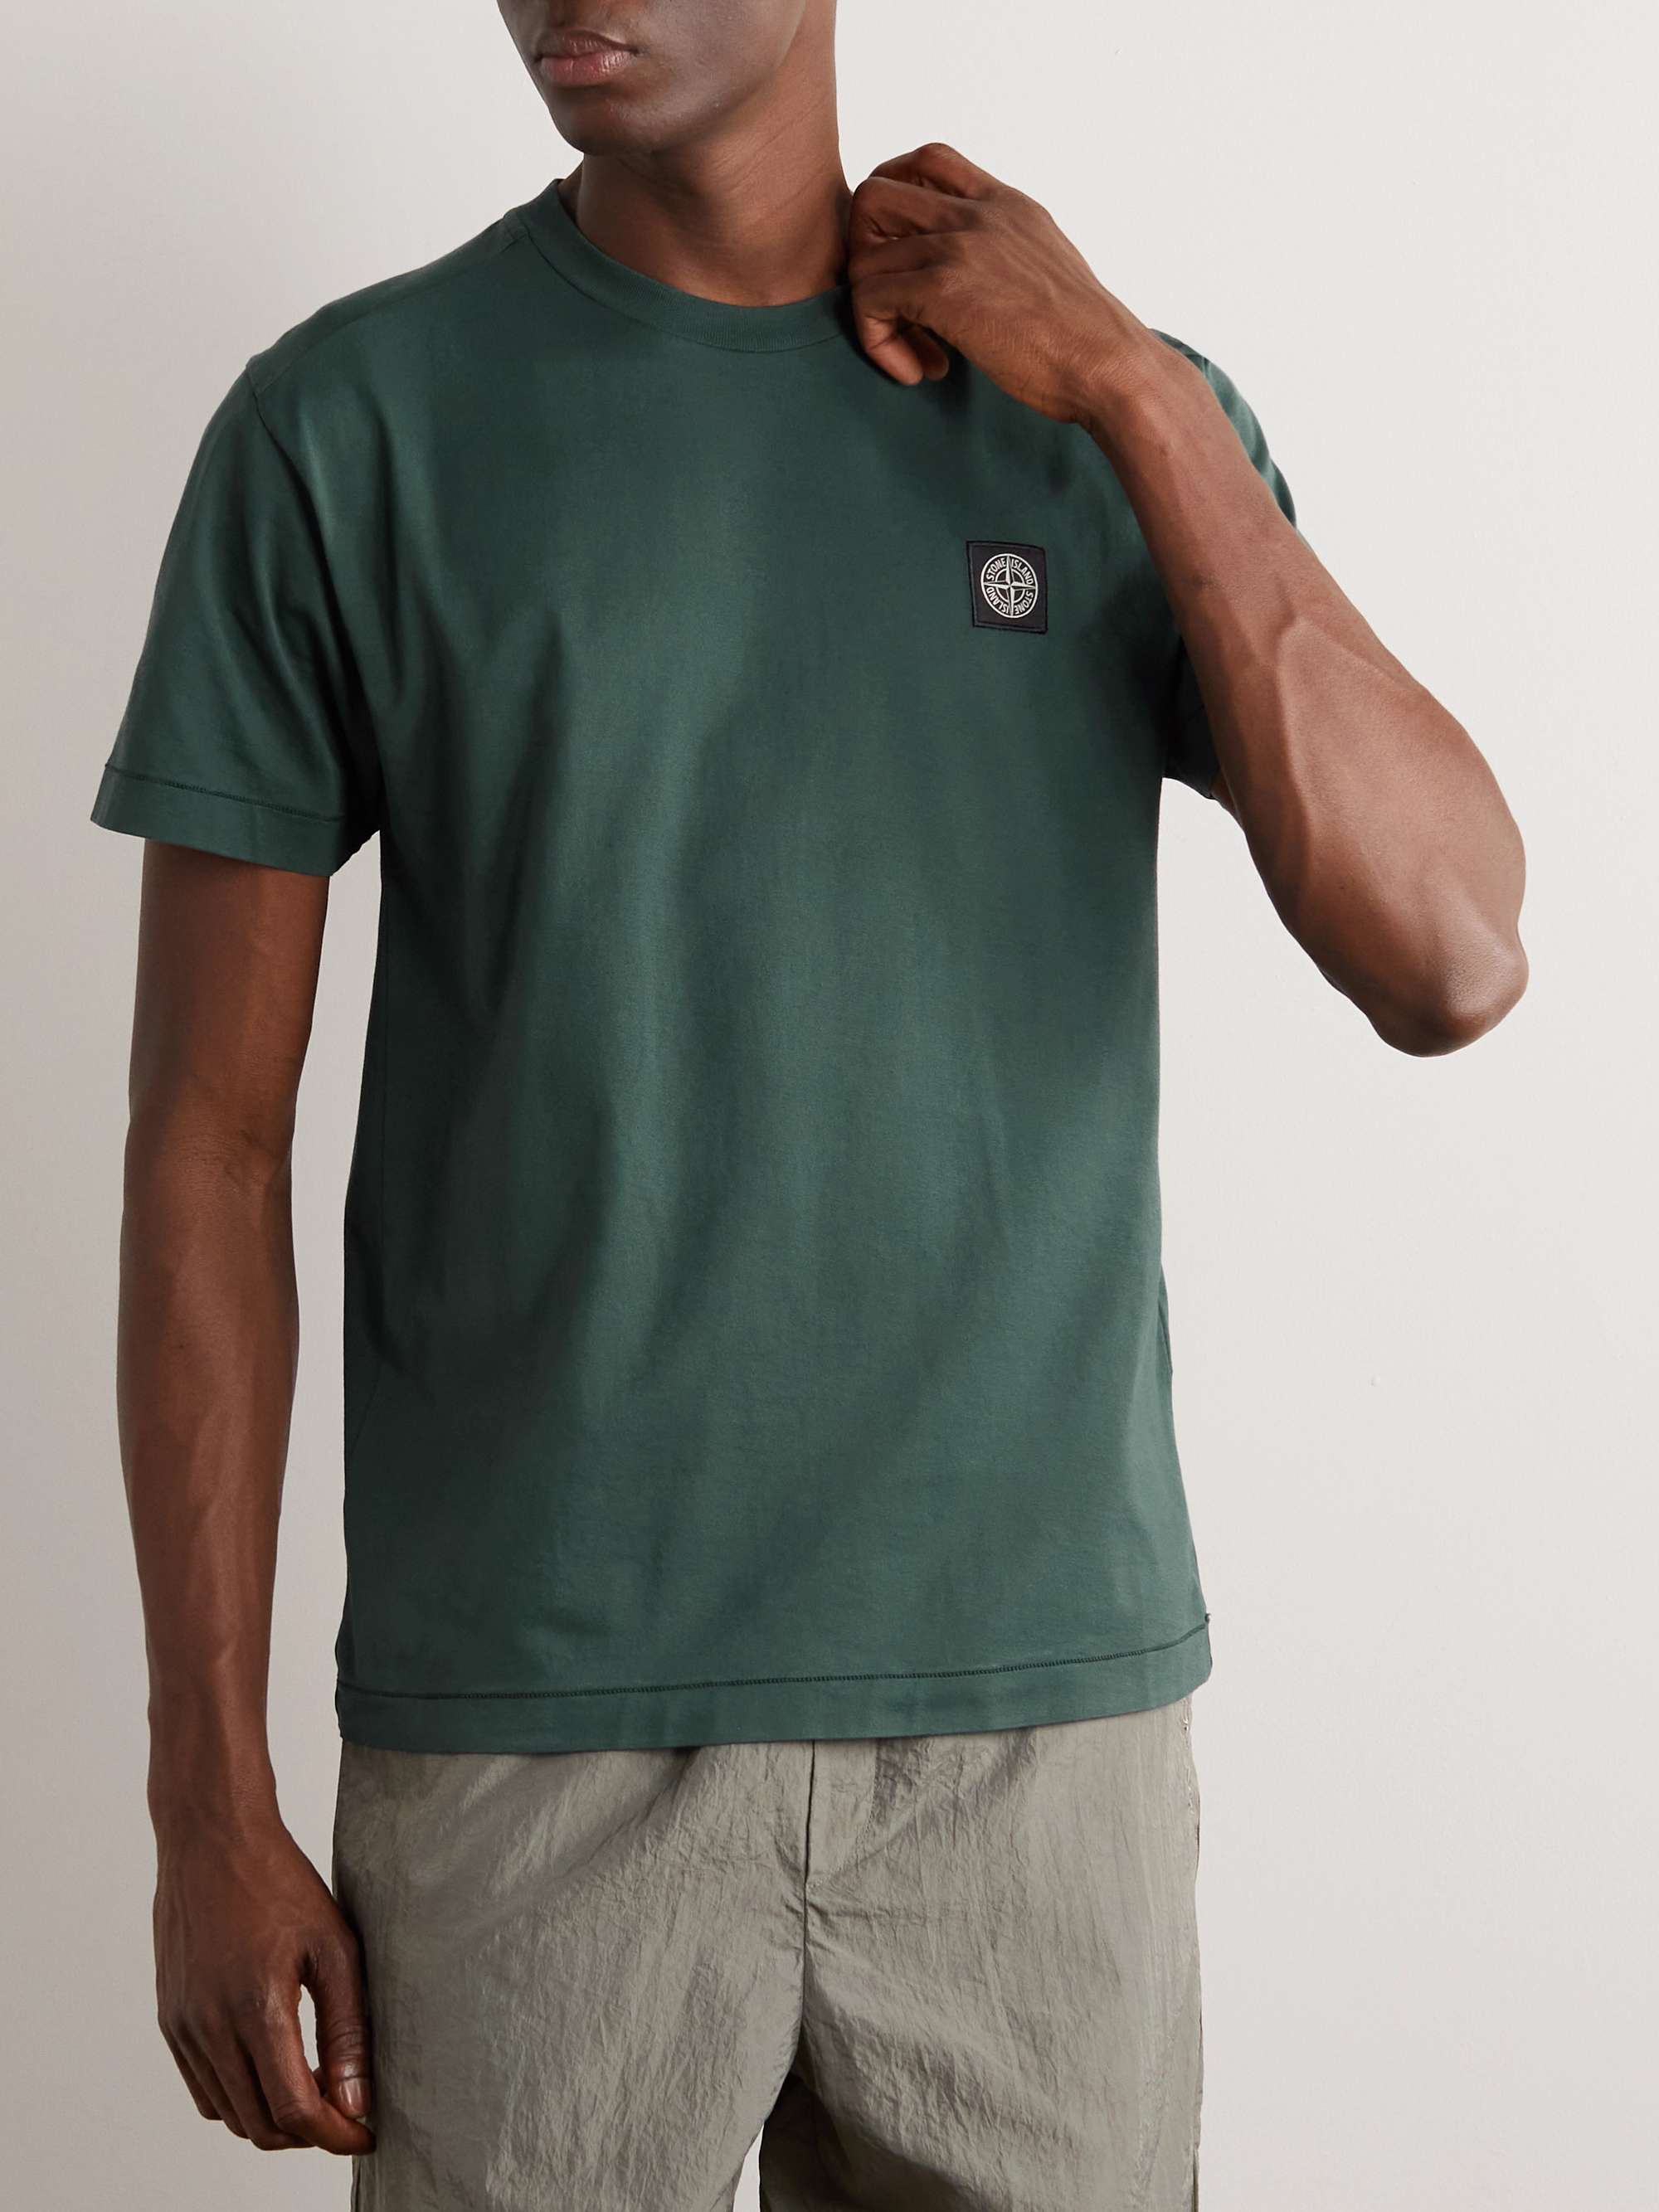 STONE ISLAND Logo-Appliquéd Garment-Dyed Cotton-Jersey T-Shirt